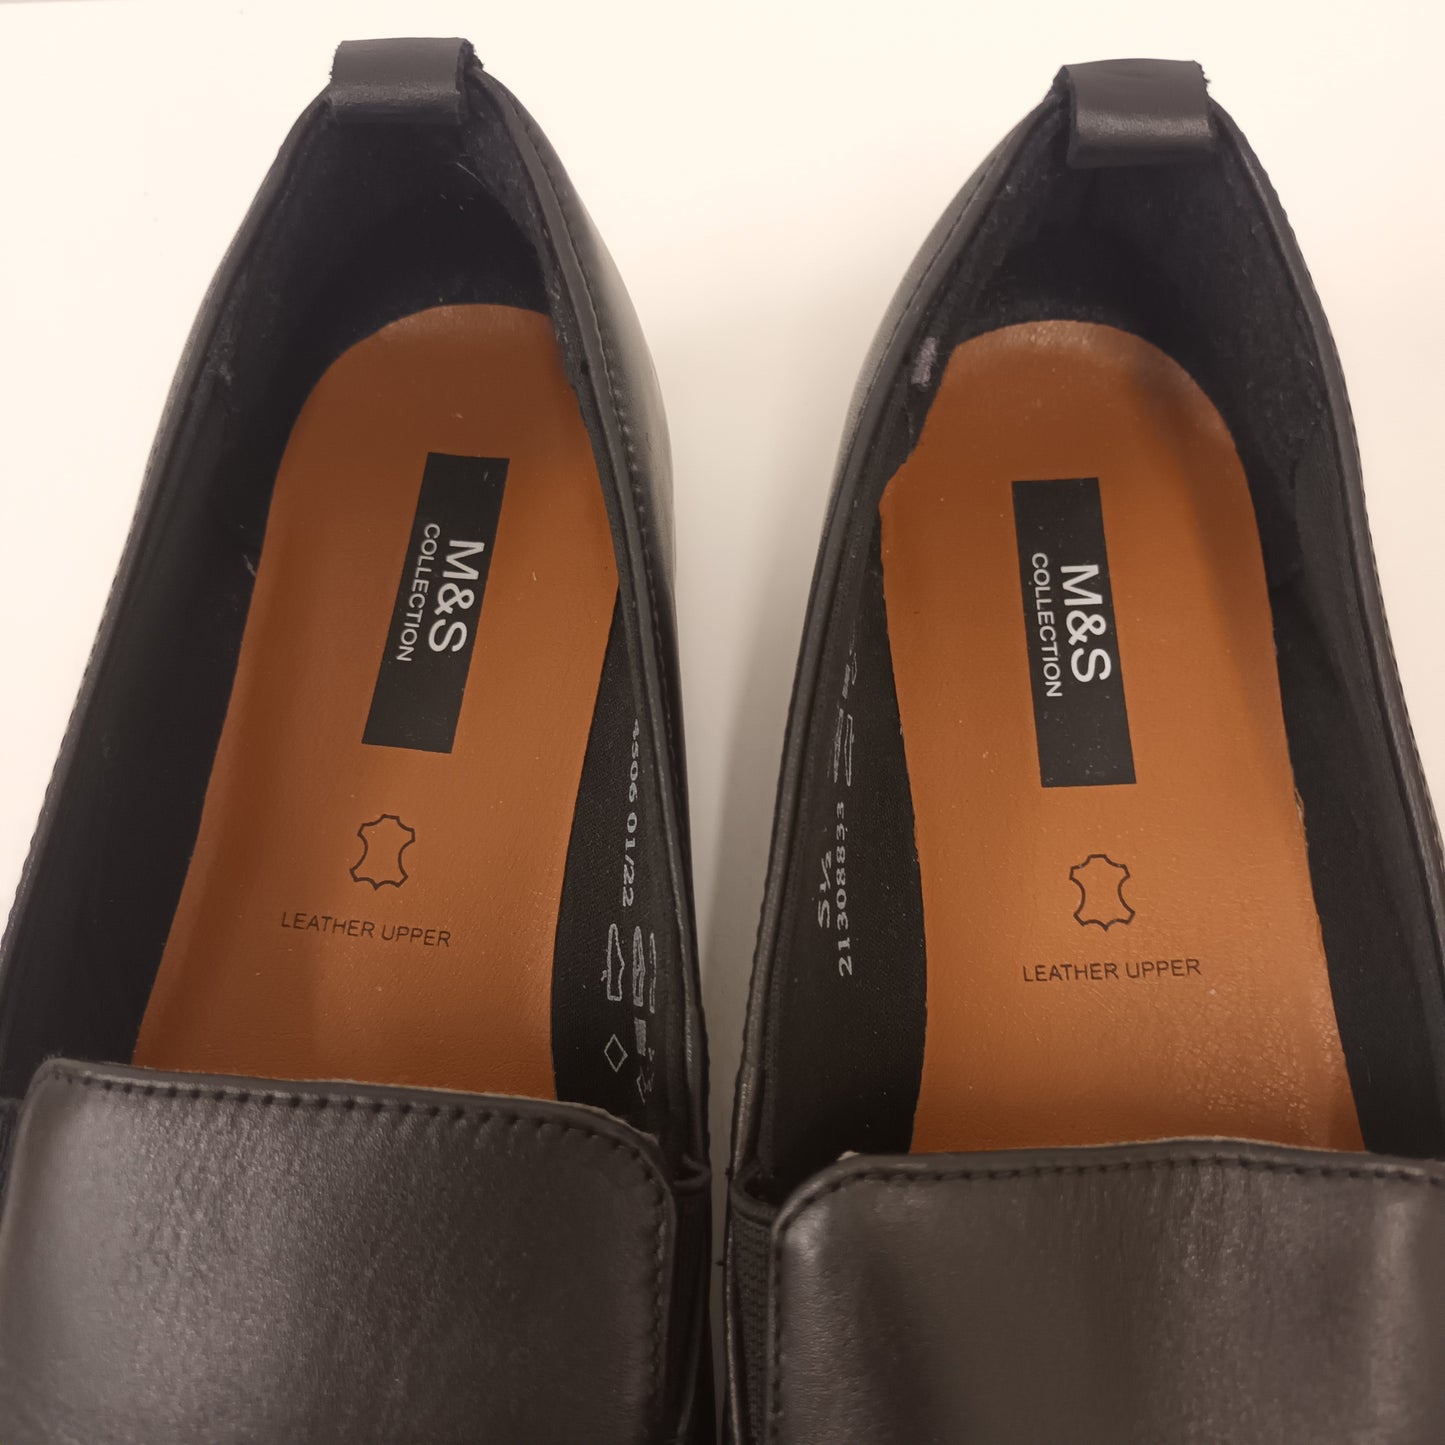 M&S Size 5 1/2 Black Leather Shoes